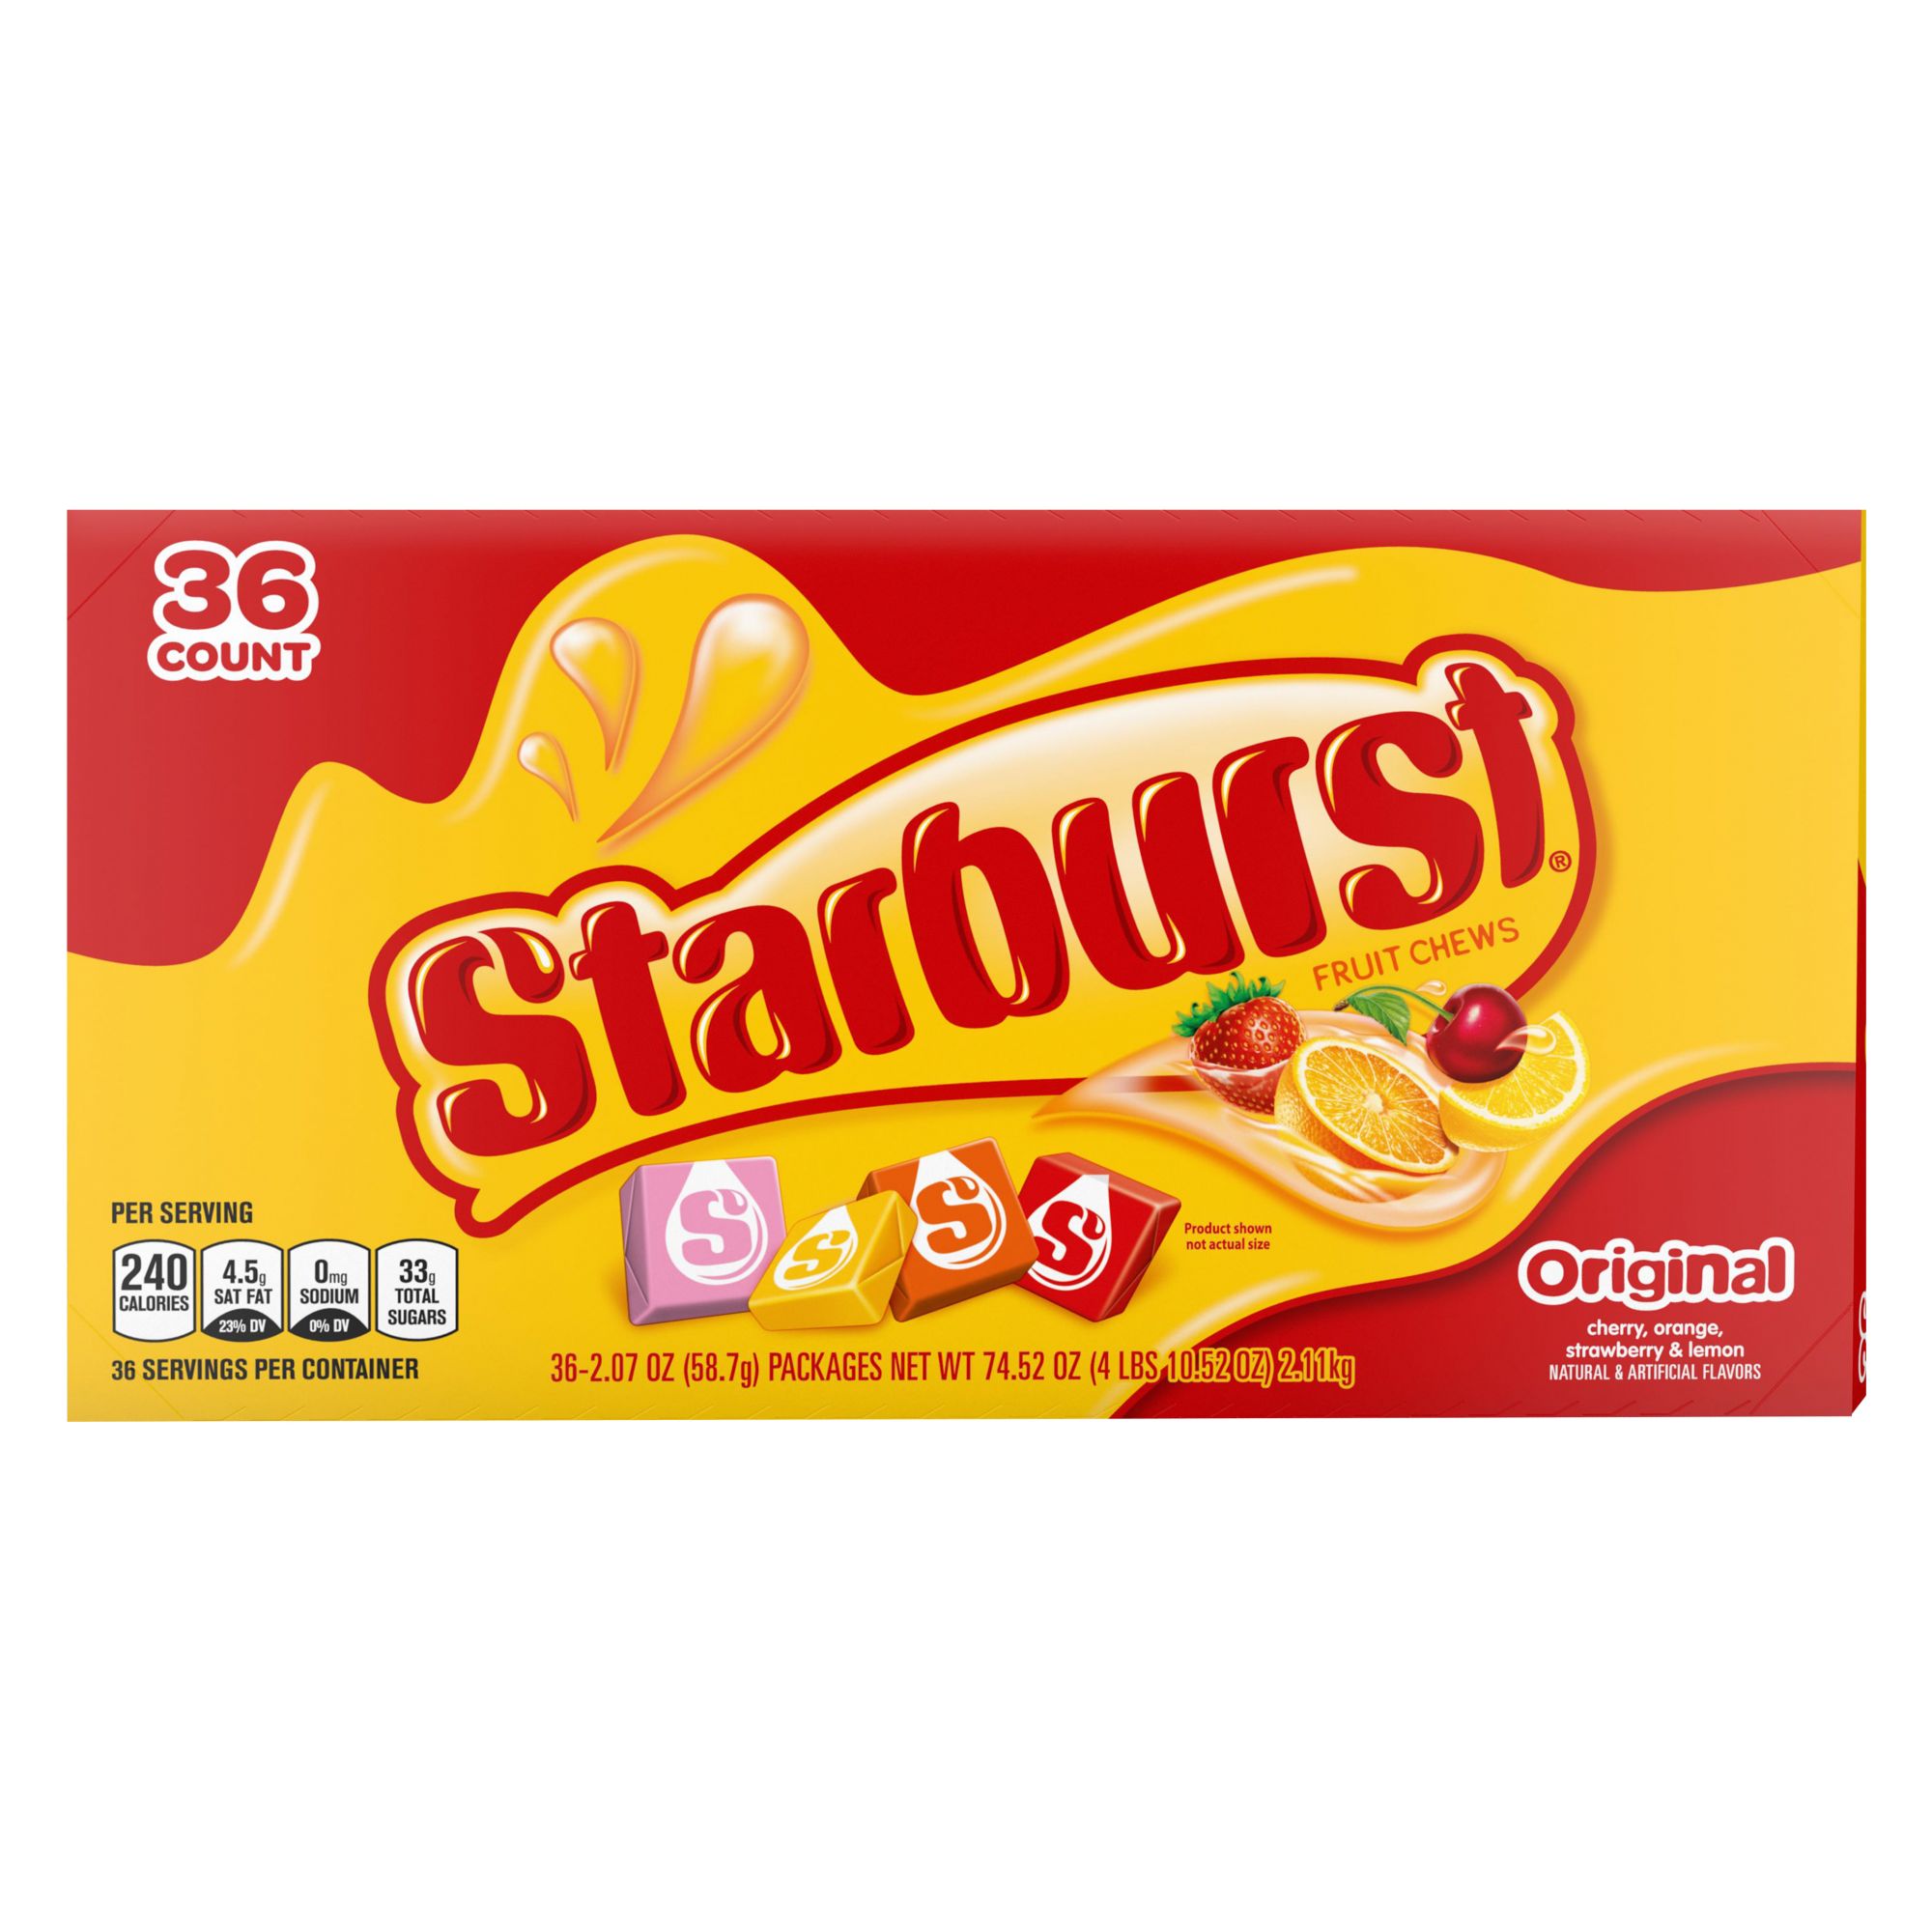 Starburst Original Fruit Chews Candy, 36 ct./2.07 oz.